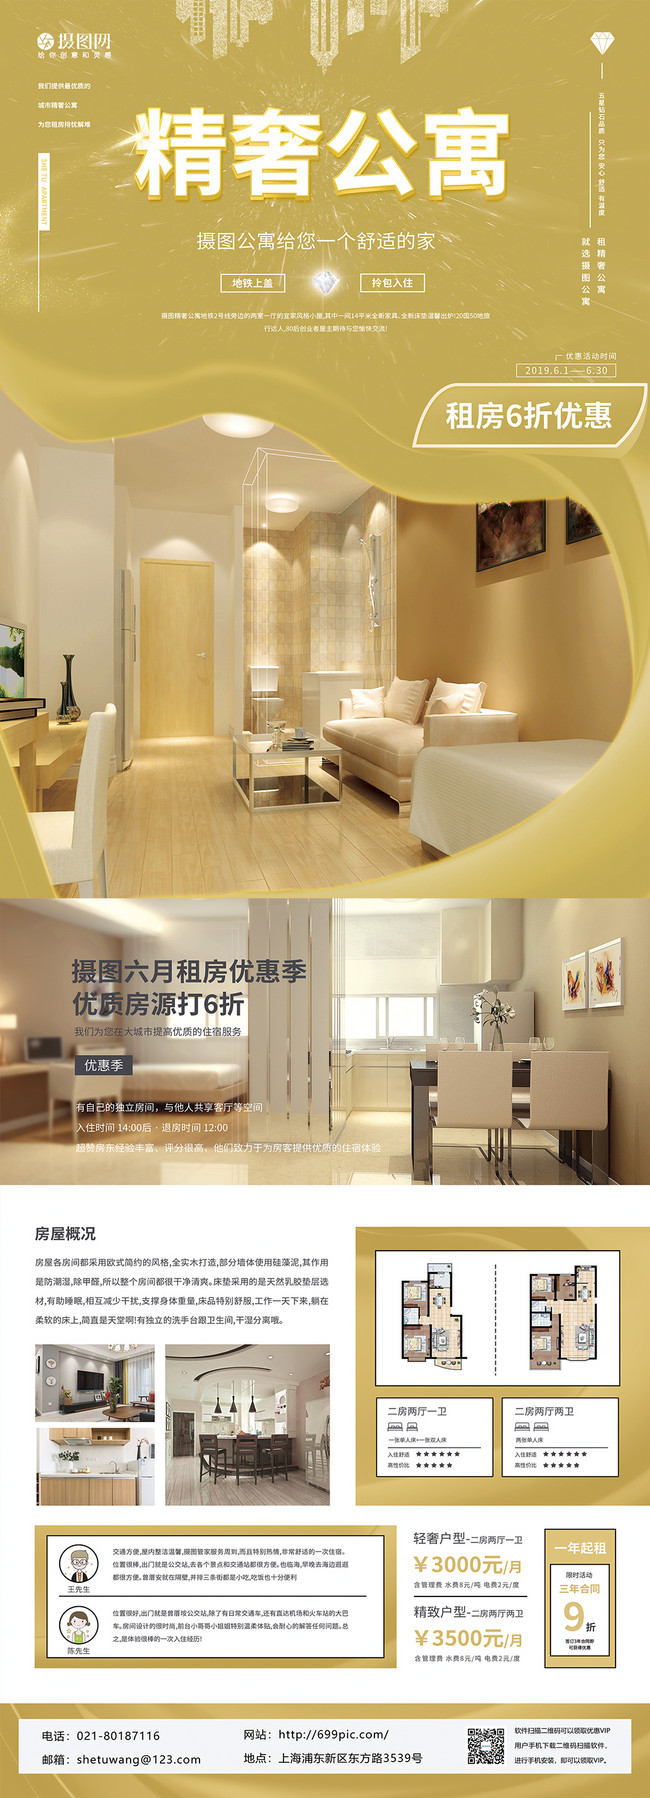 Golden luxury apartment rental flyer template image_picture free In Apartment Rental Flyer Template